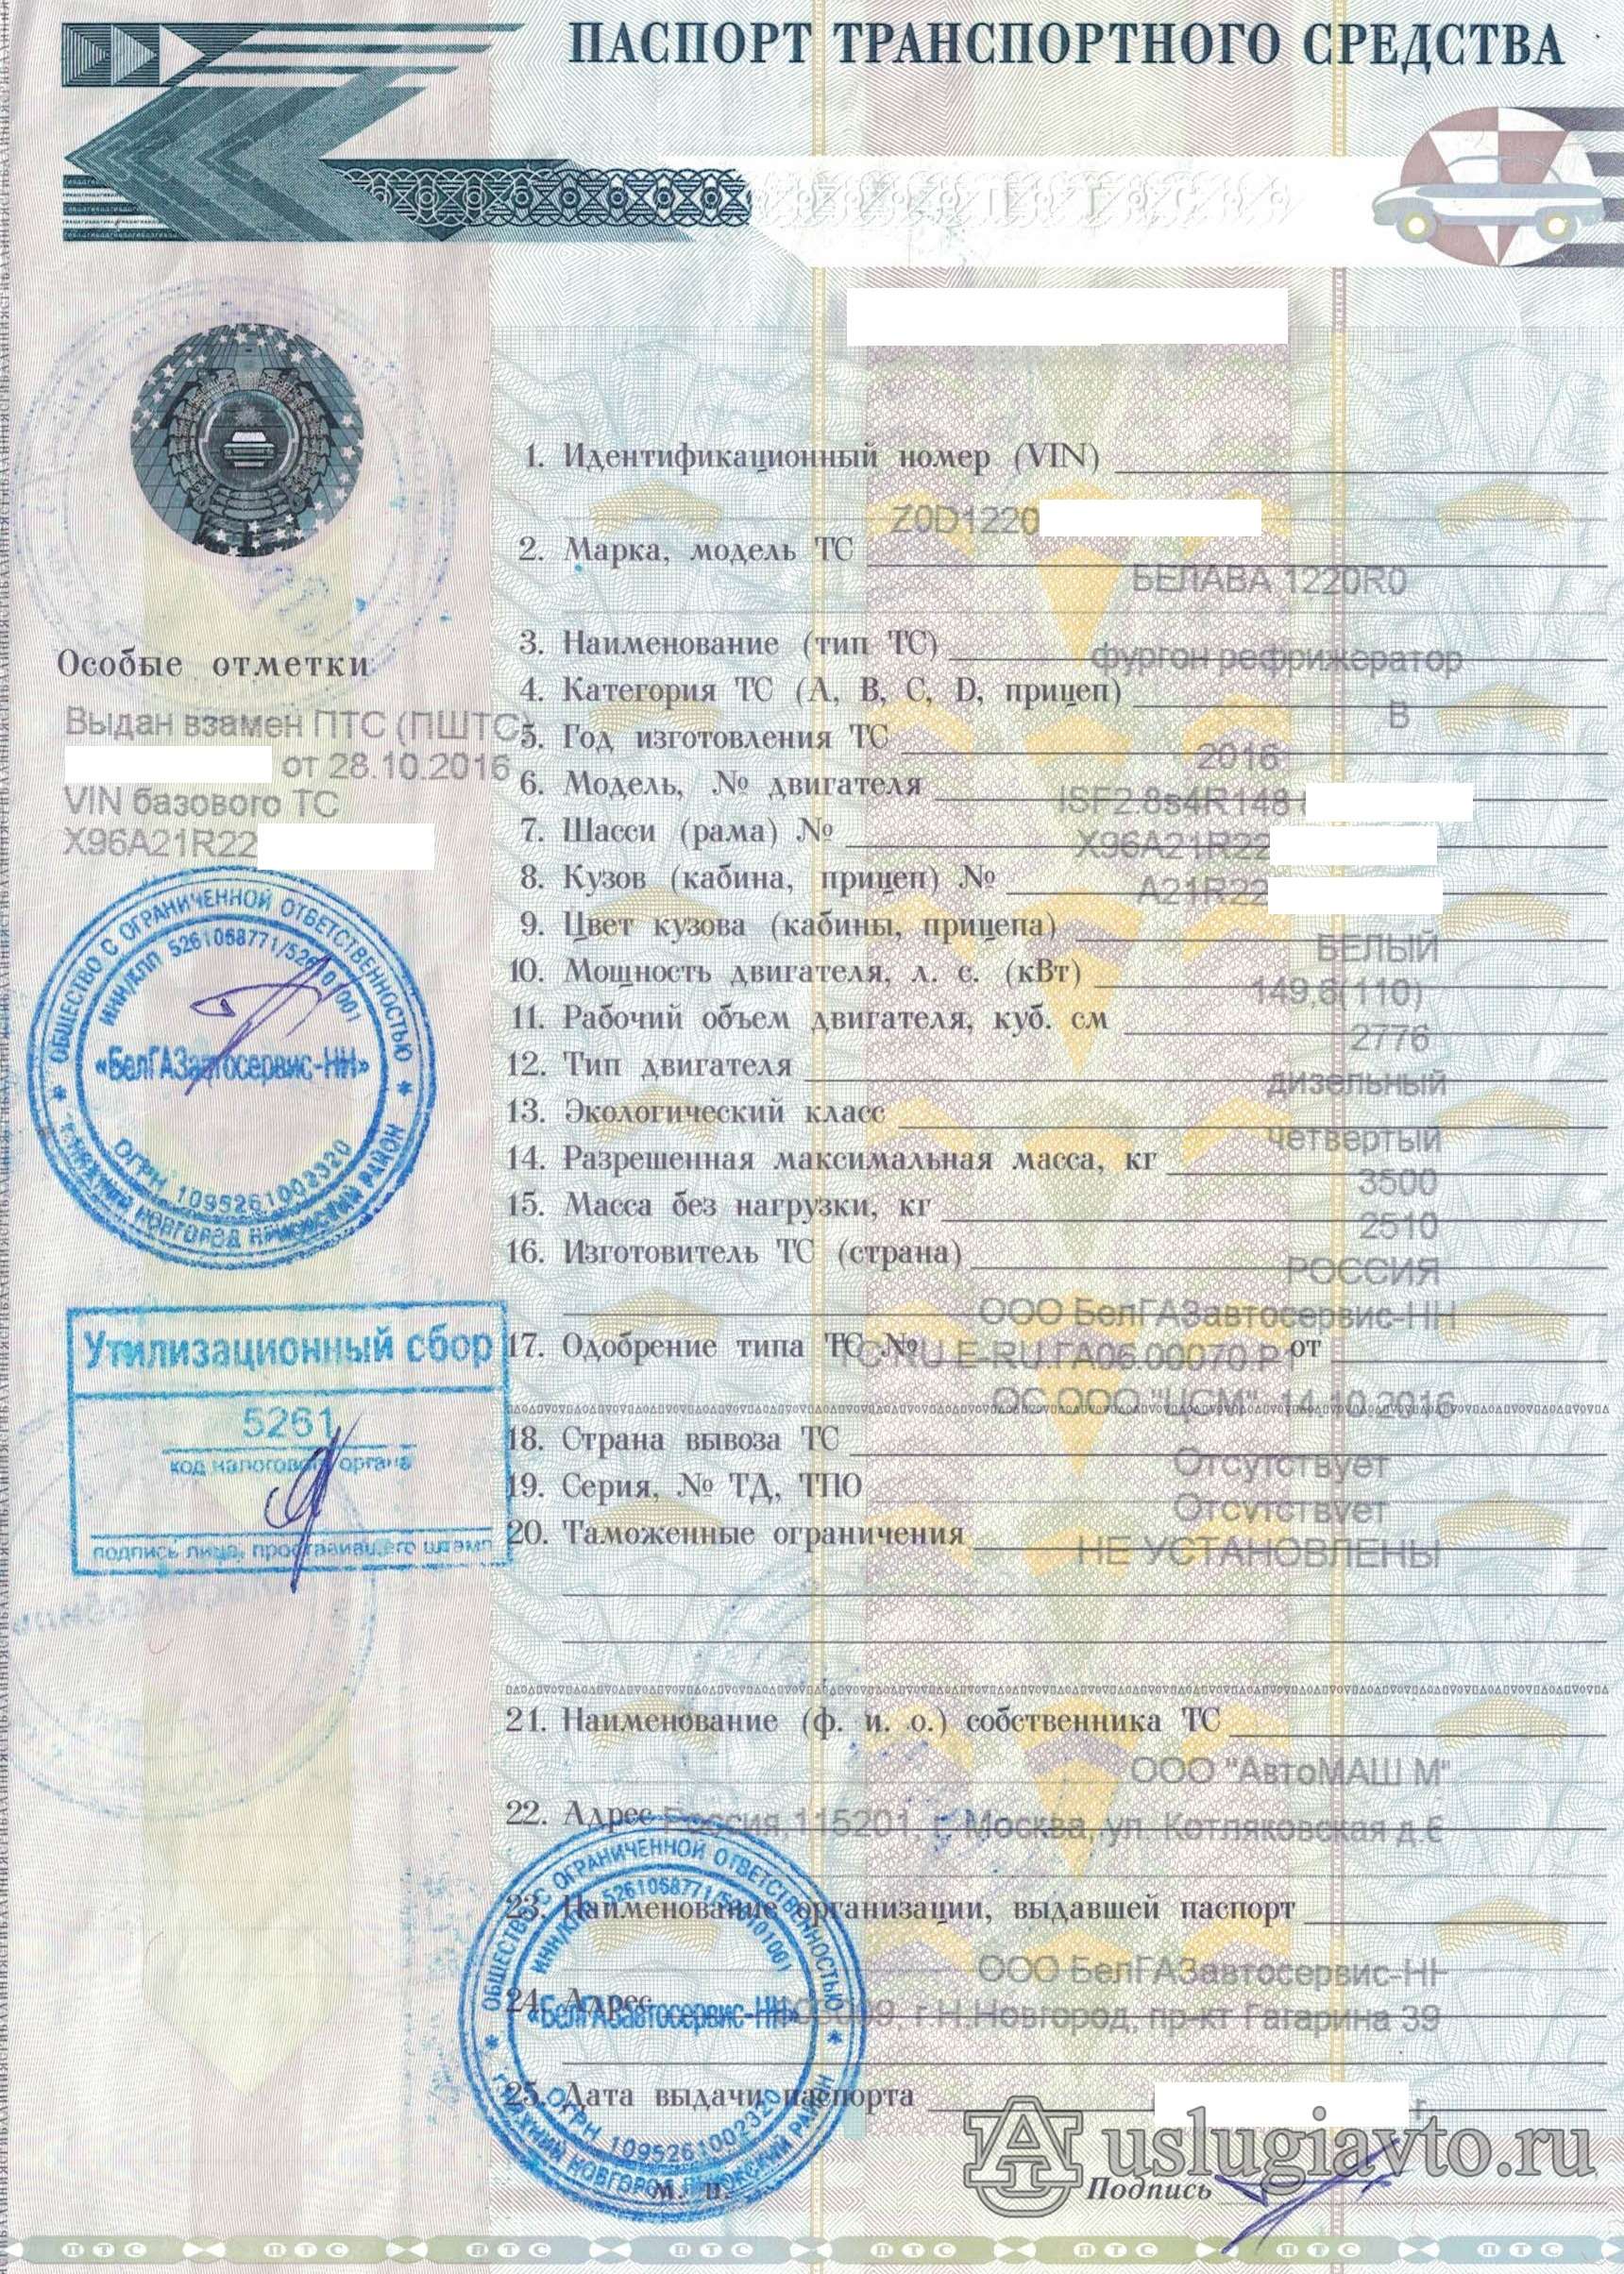 Паспорт транспортного средства (ПТС)